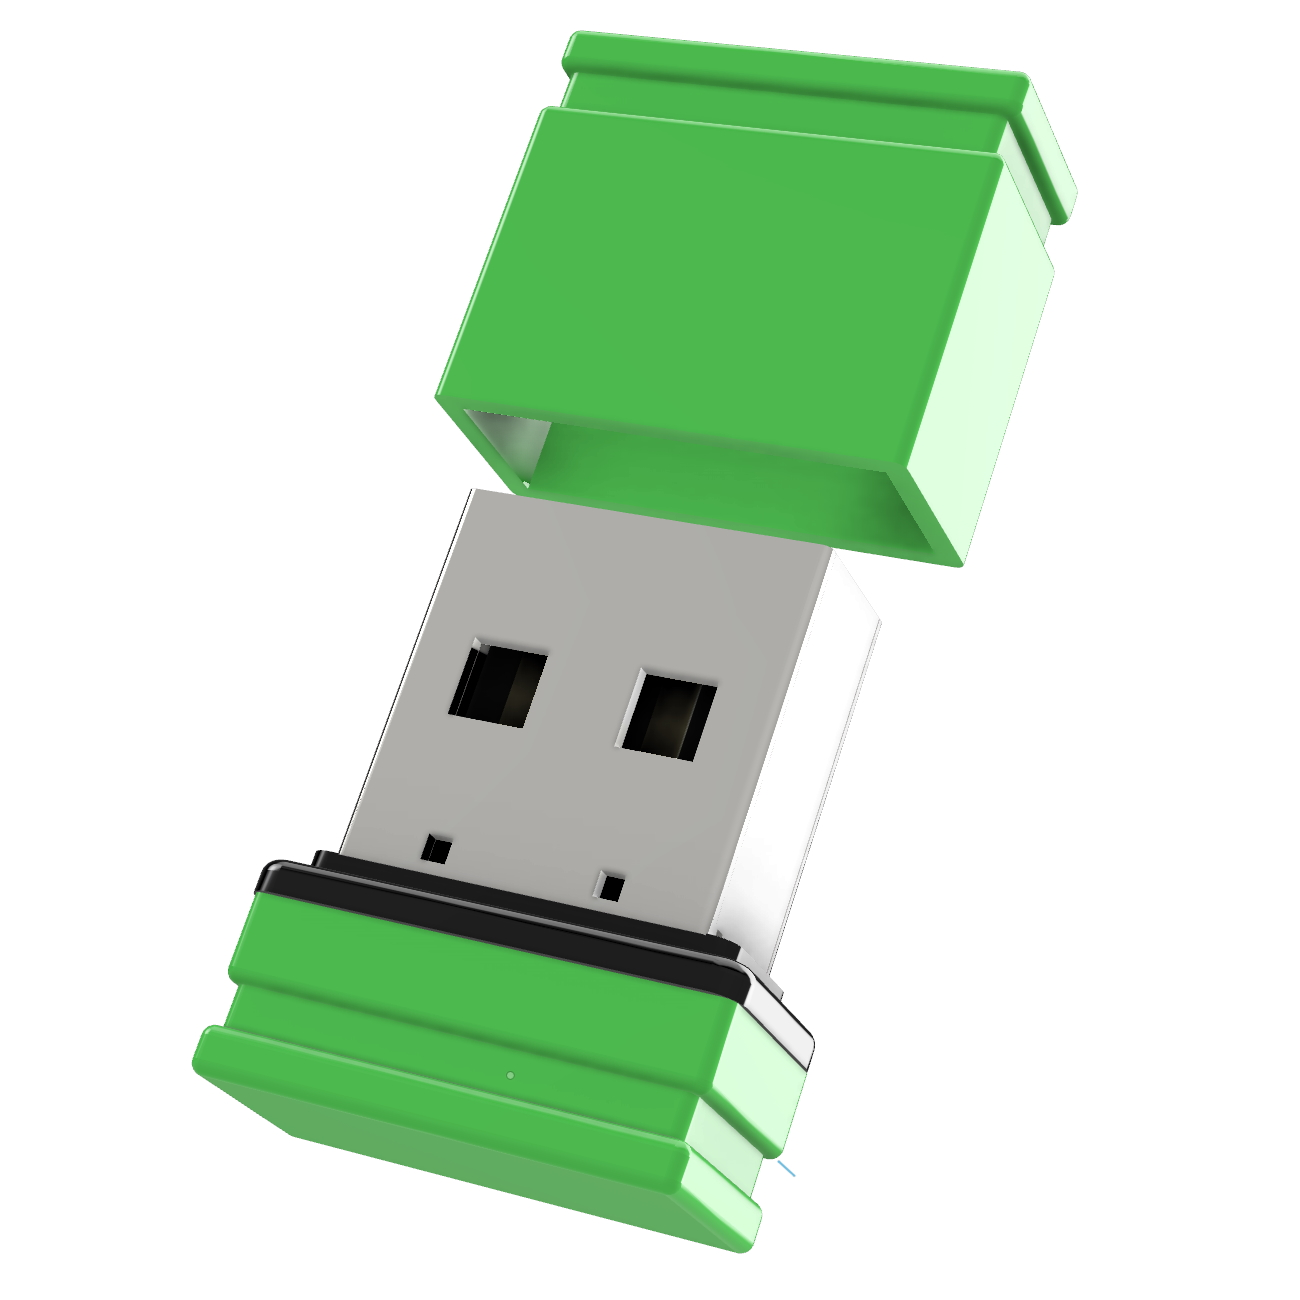 P1 Mini (Grün/Schwarz, USB 32 USB-Stick GB) ®ULTRA GERMANY